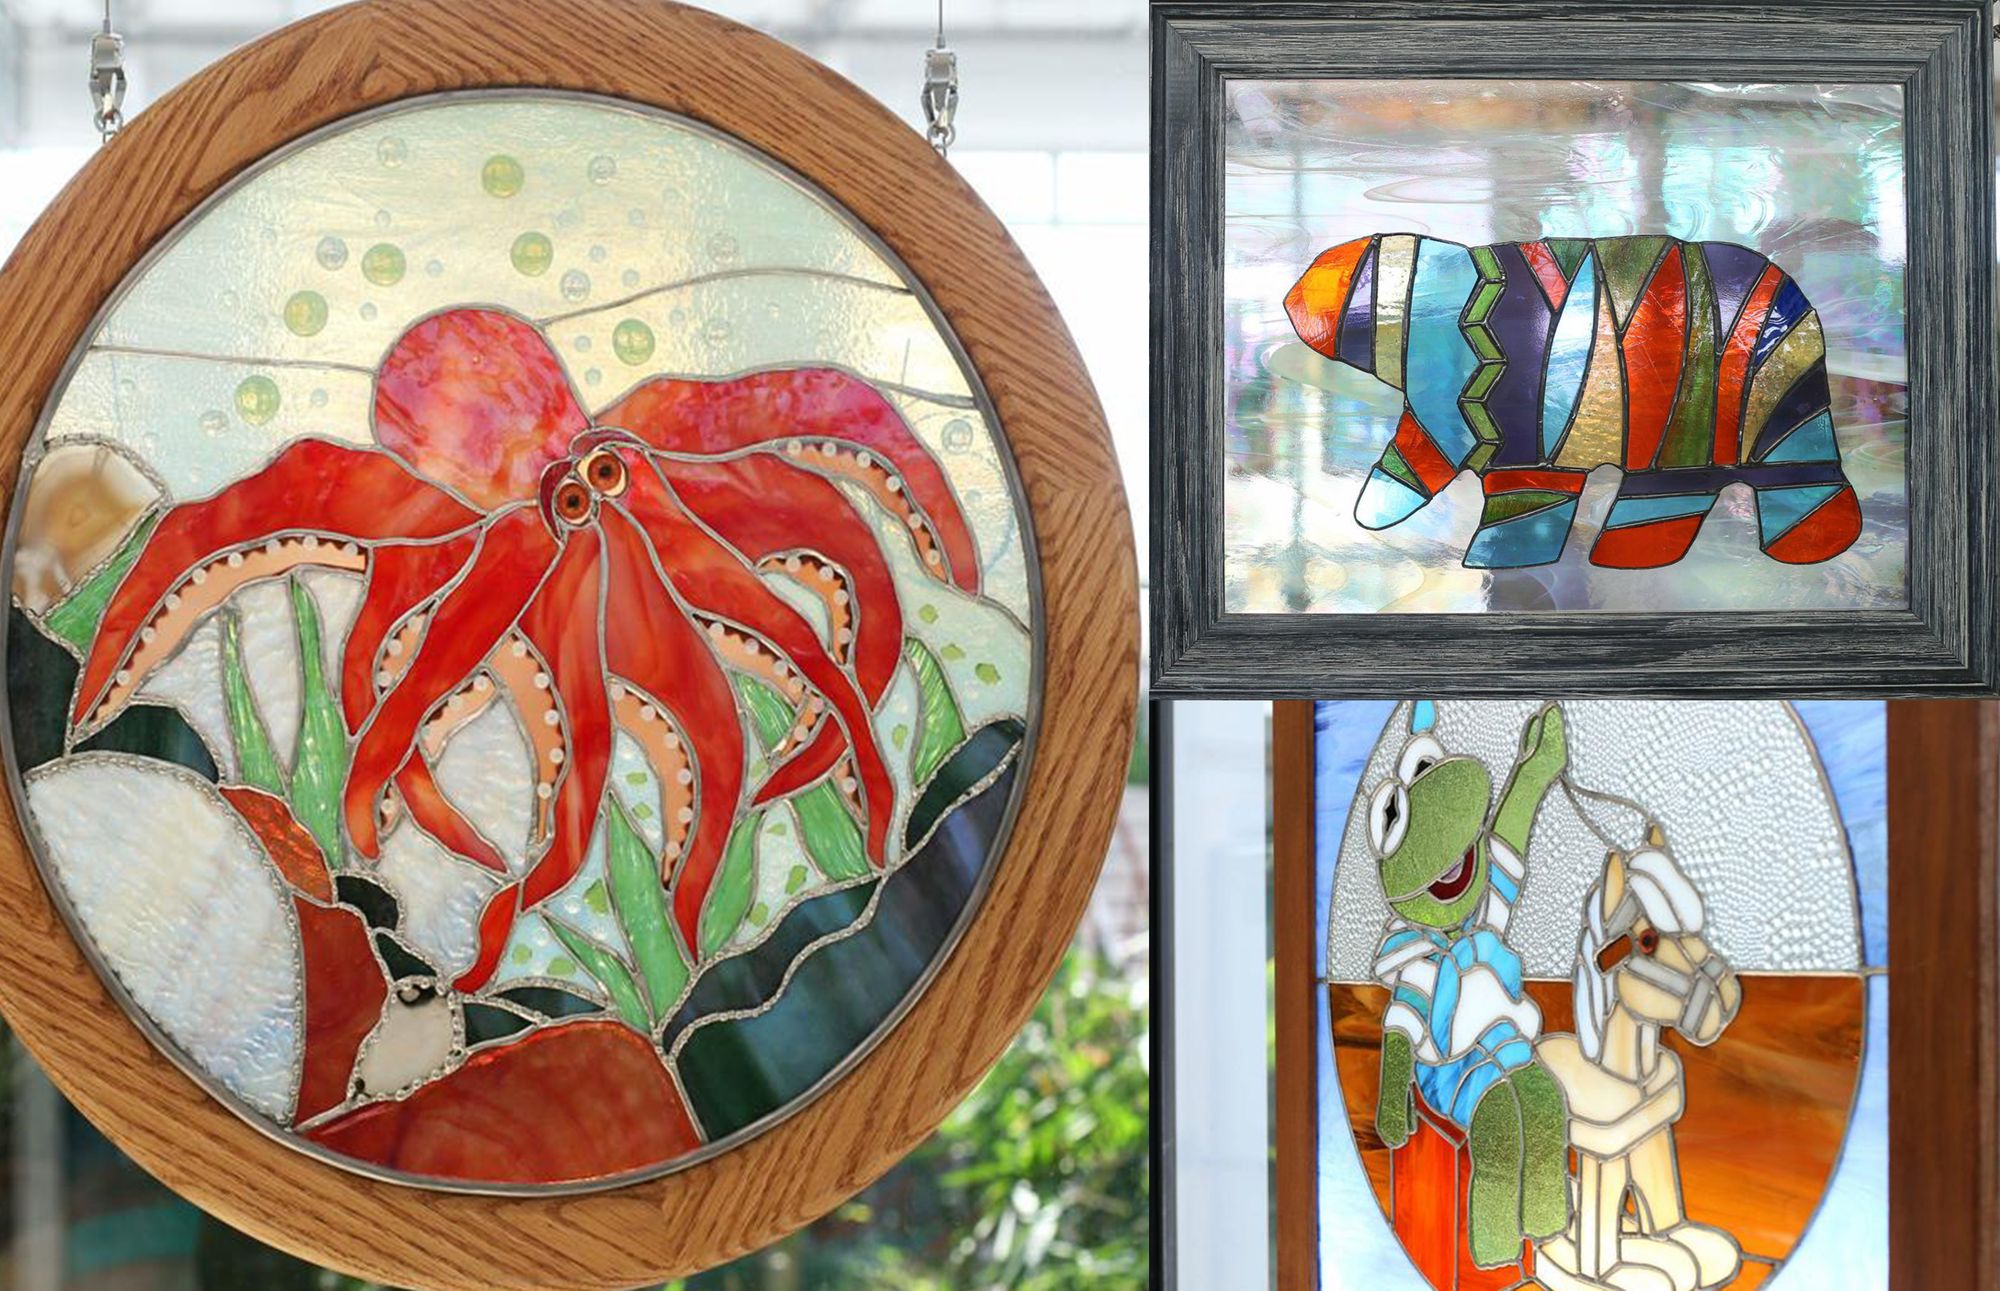 Stunning Works Of Glass Art On Display At The Botanic Gardens